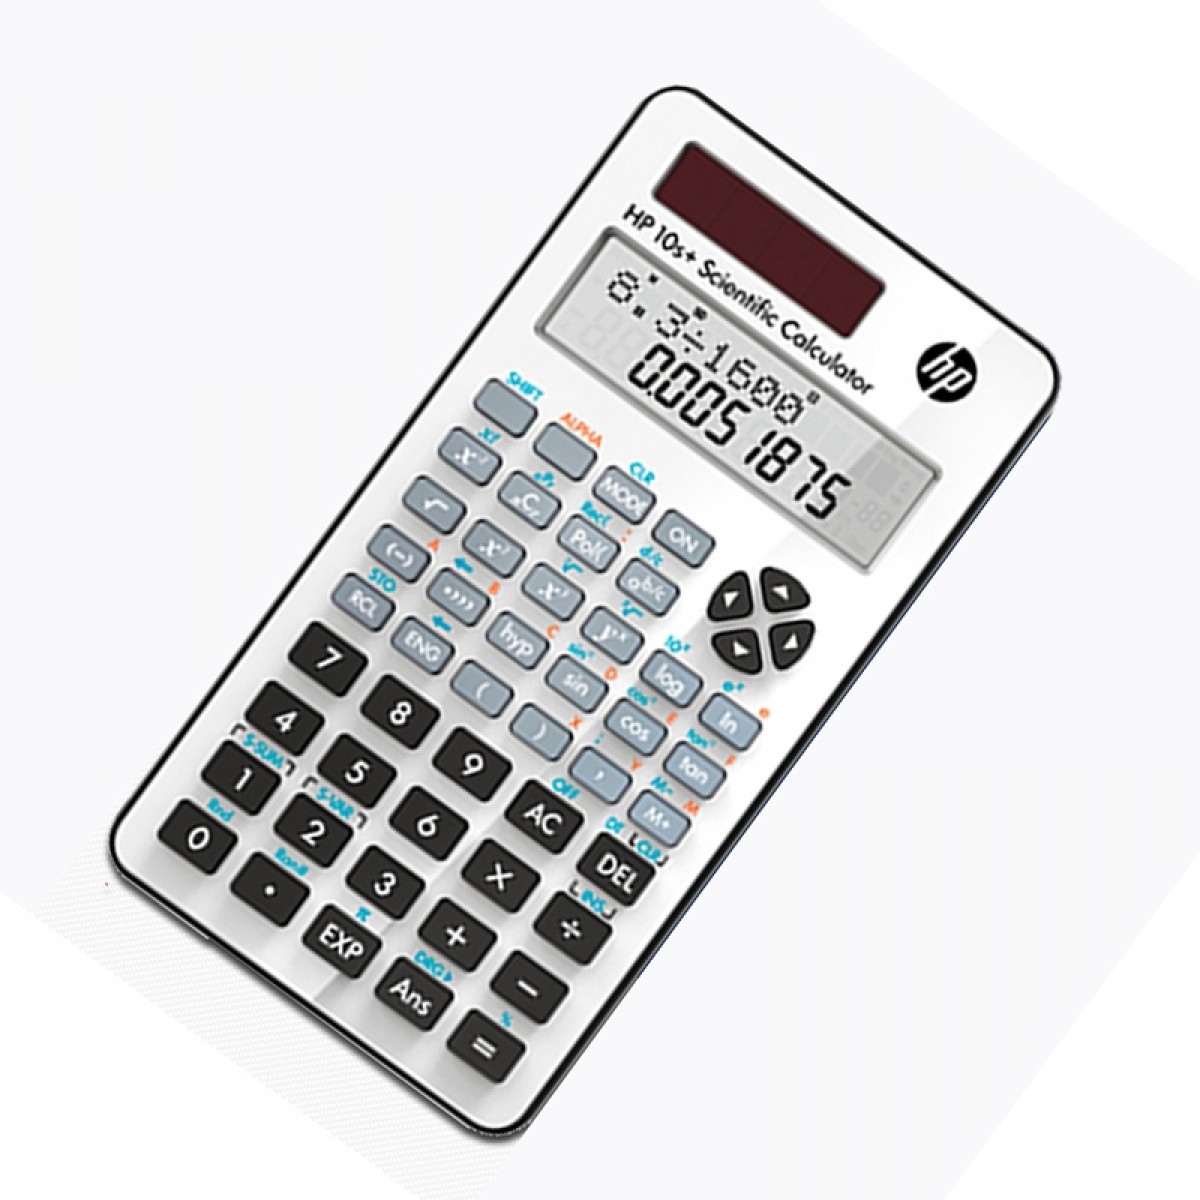 HP HP10S+ Scientific Calculator - The School Locker